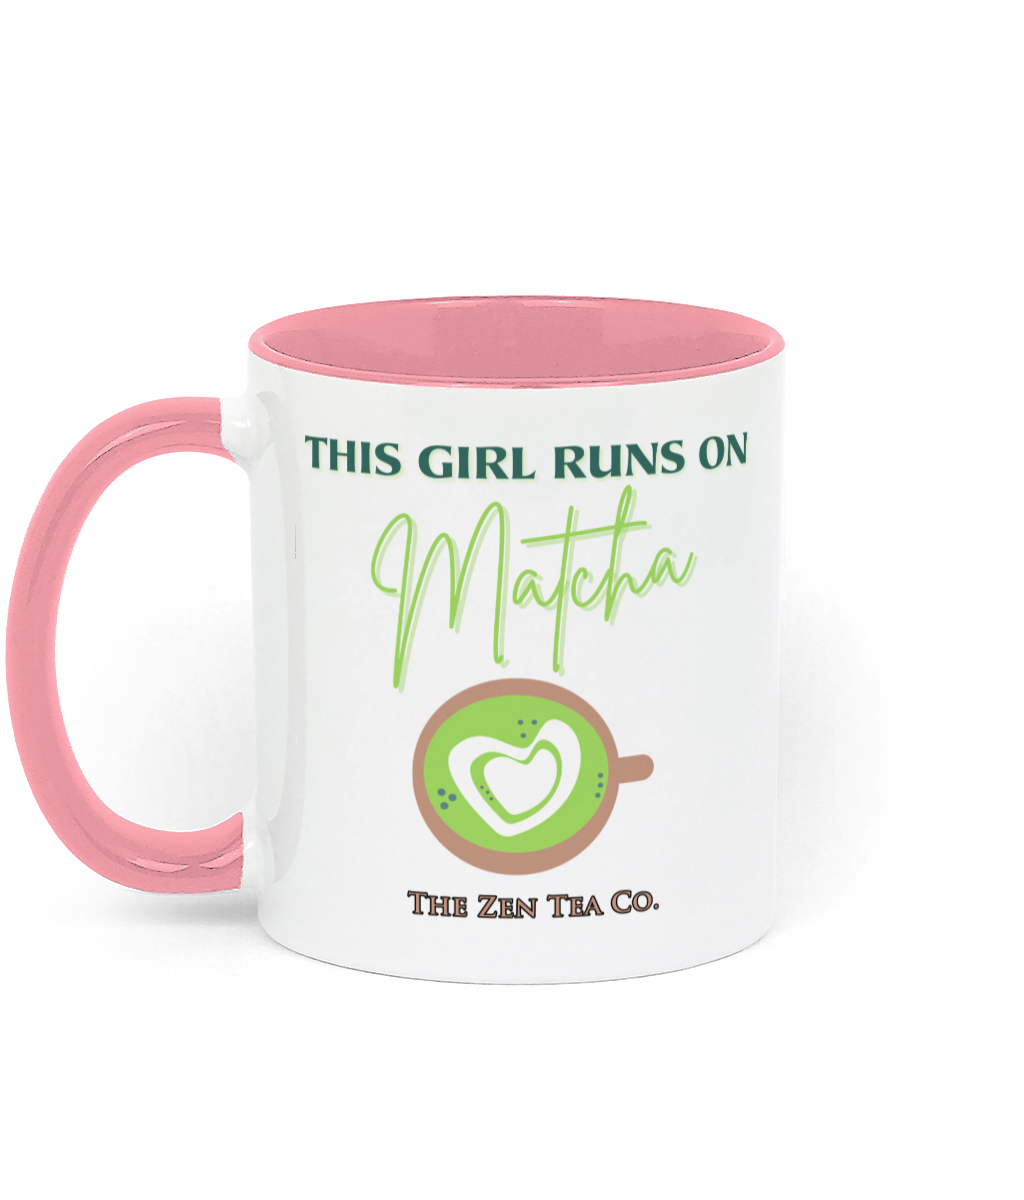 Two Toned Ceramic Mug for Matcha Green Tea lovers - This Girl Runs On Matcha